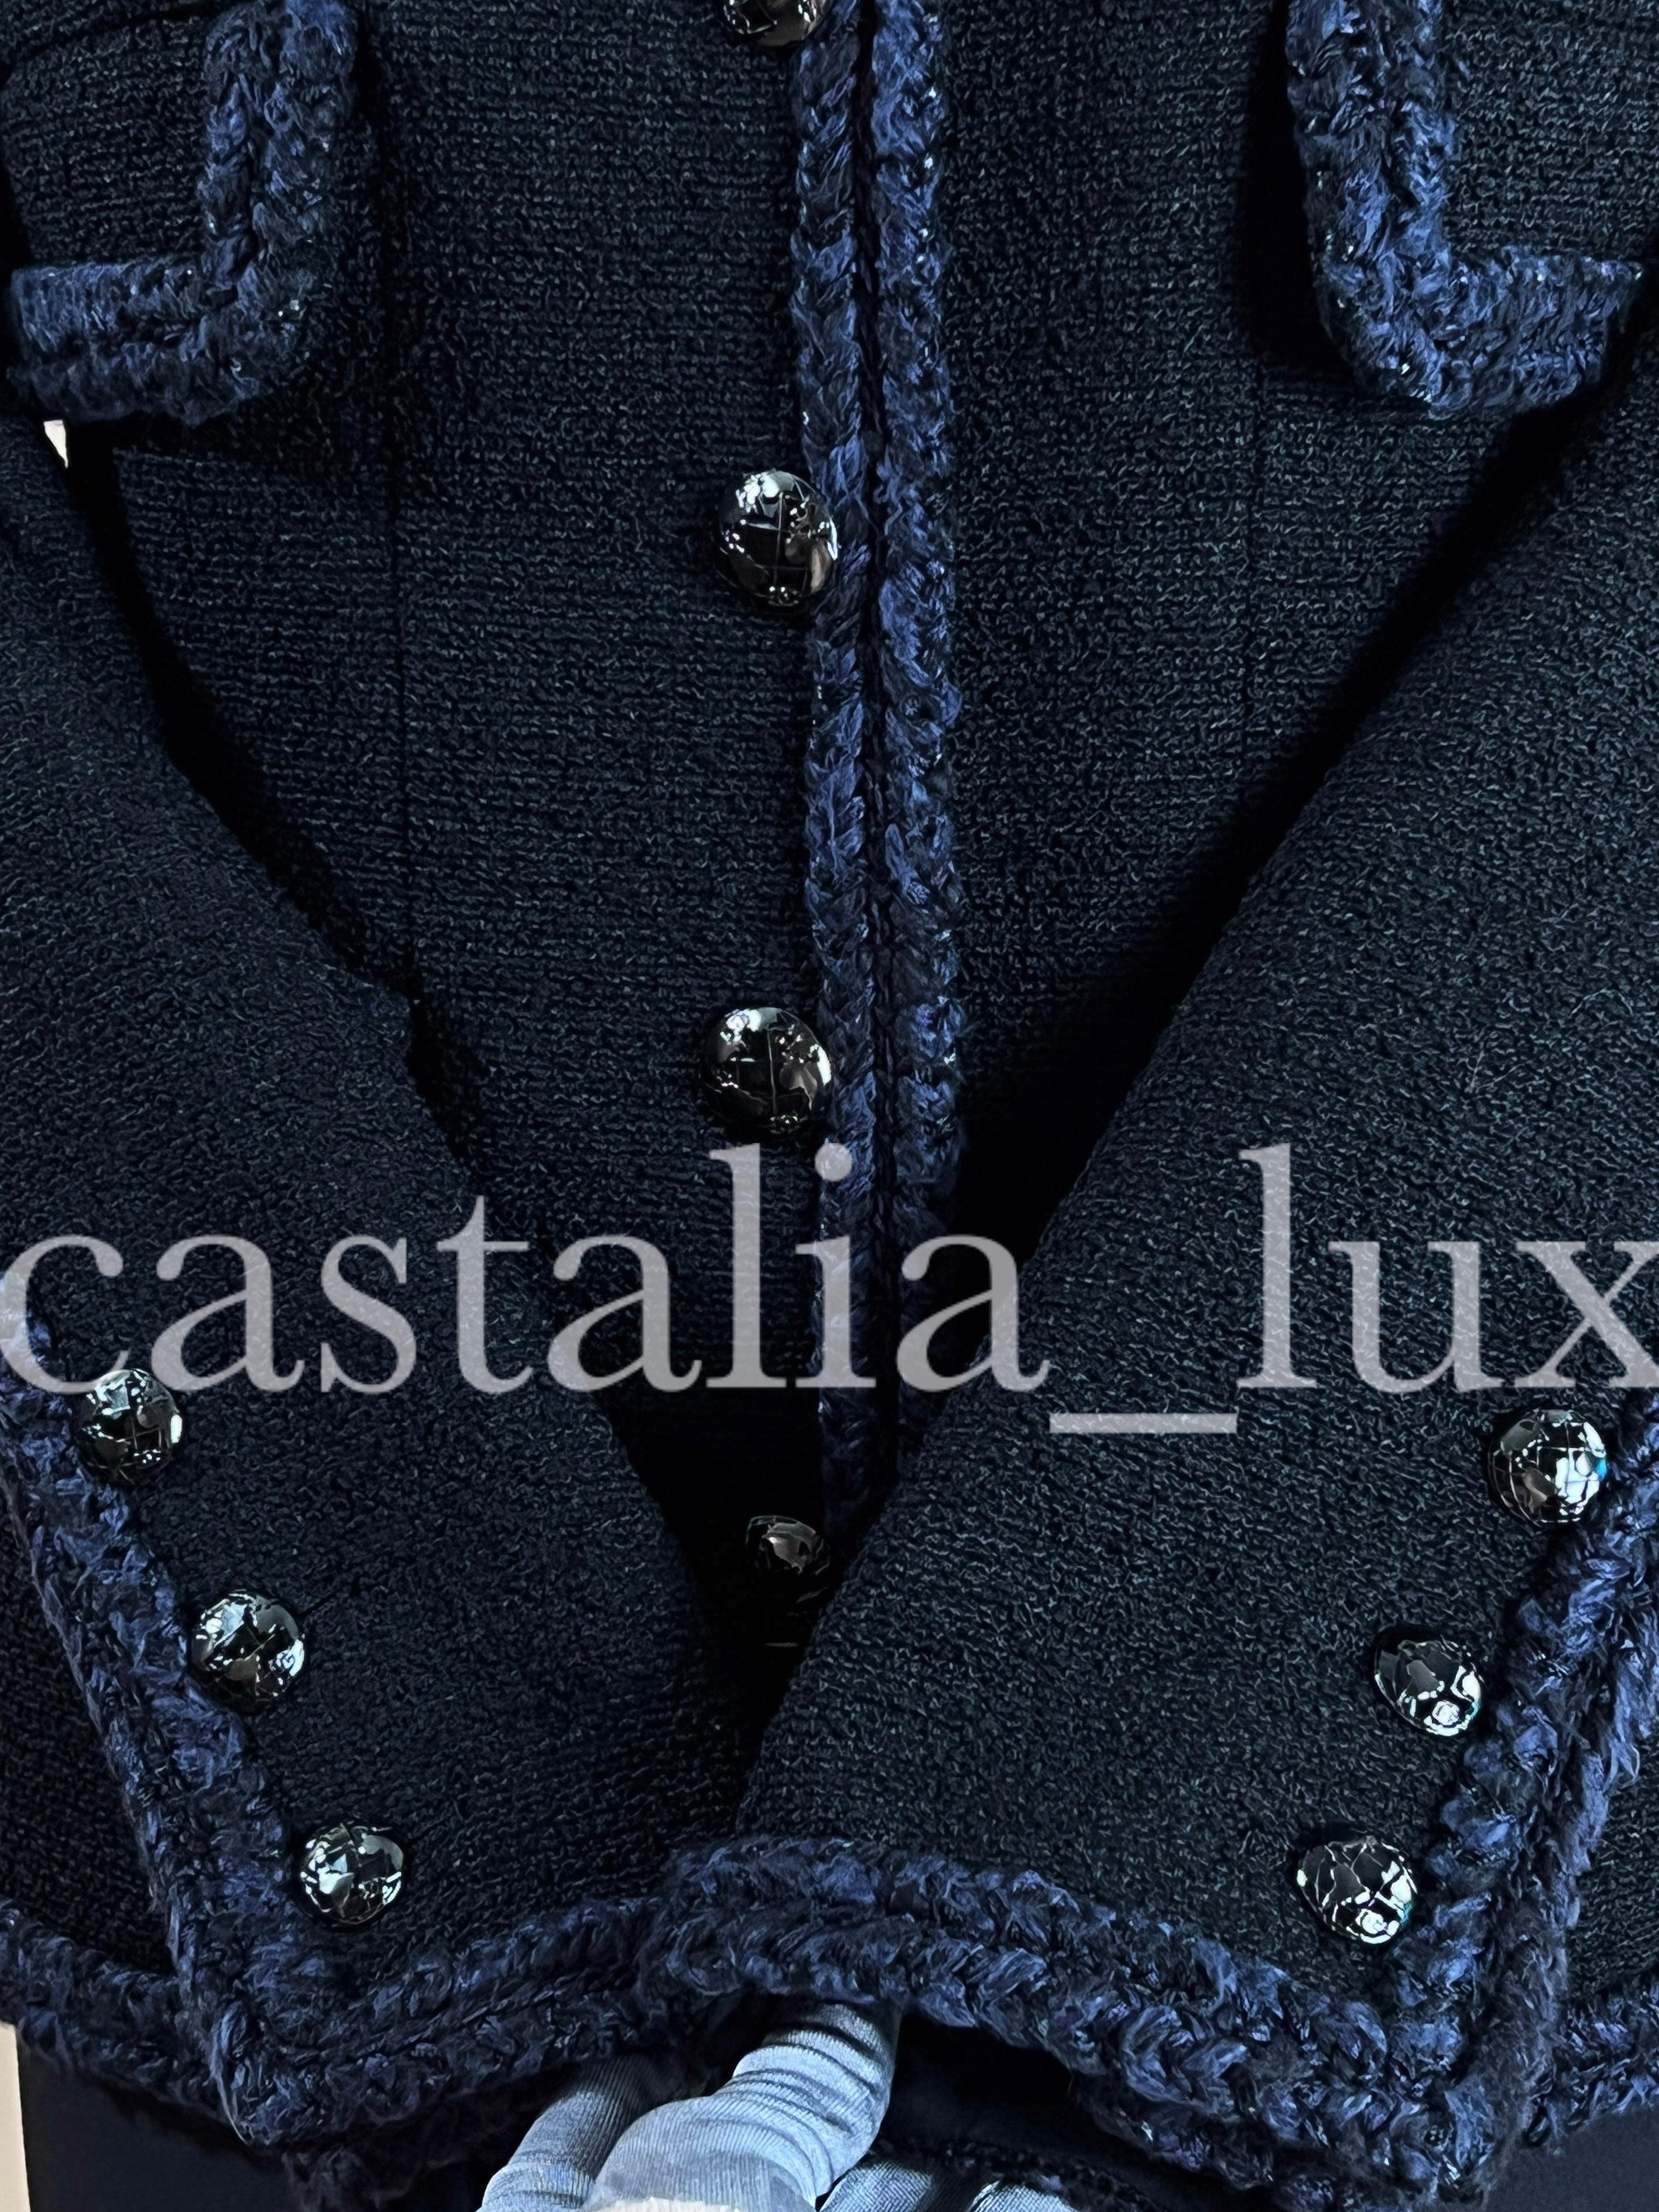 Chanel Iconic Keira Knightley Style Black Tweed Jacket 4